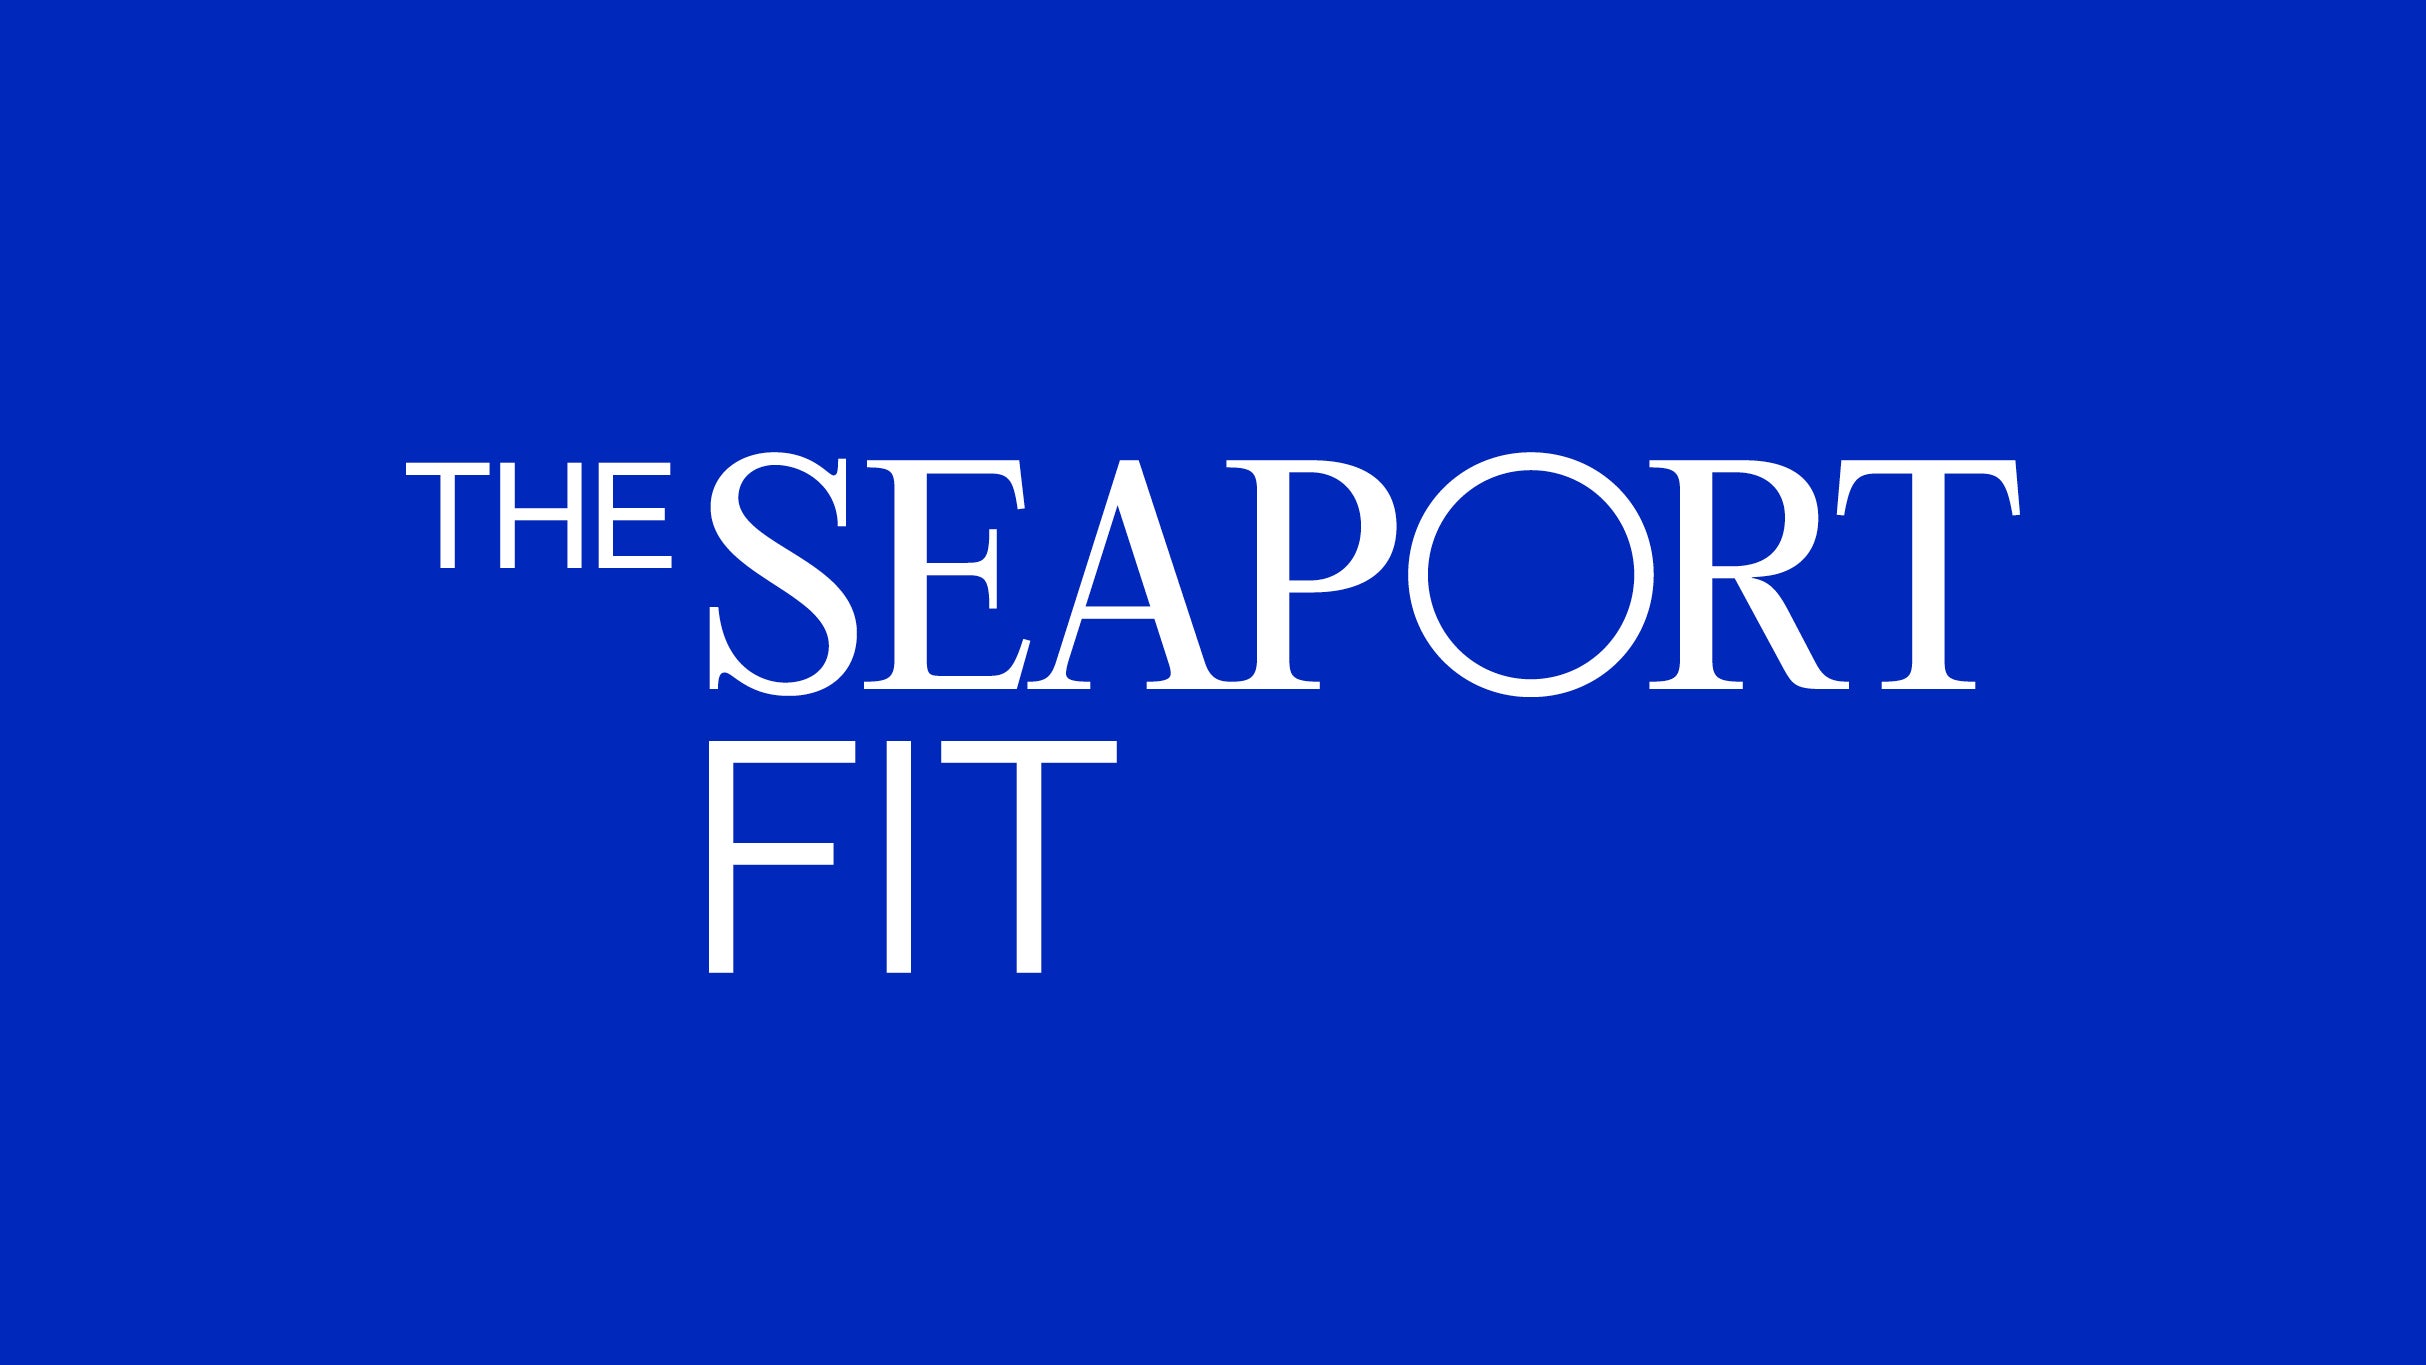 Seaport Fit presale information on freepresalepasswords.com